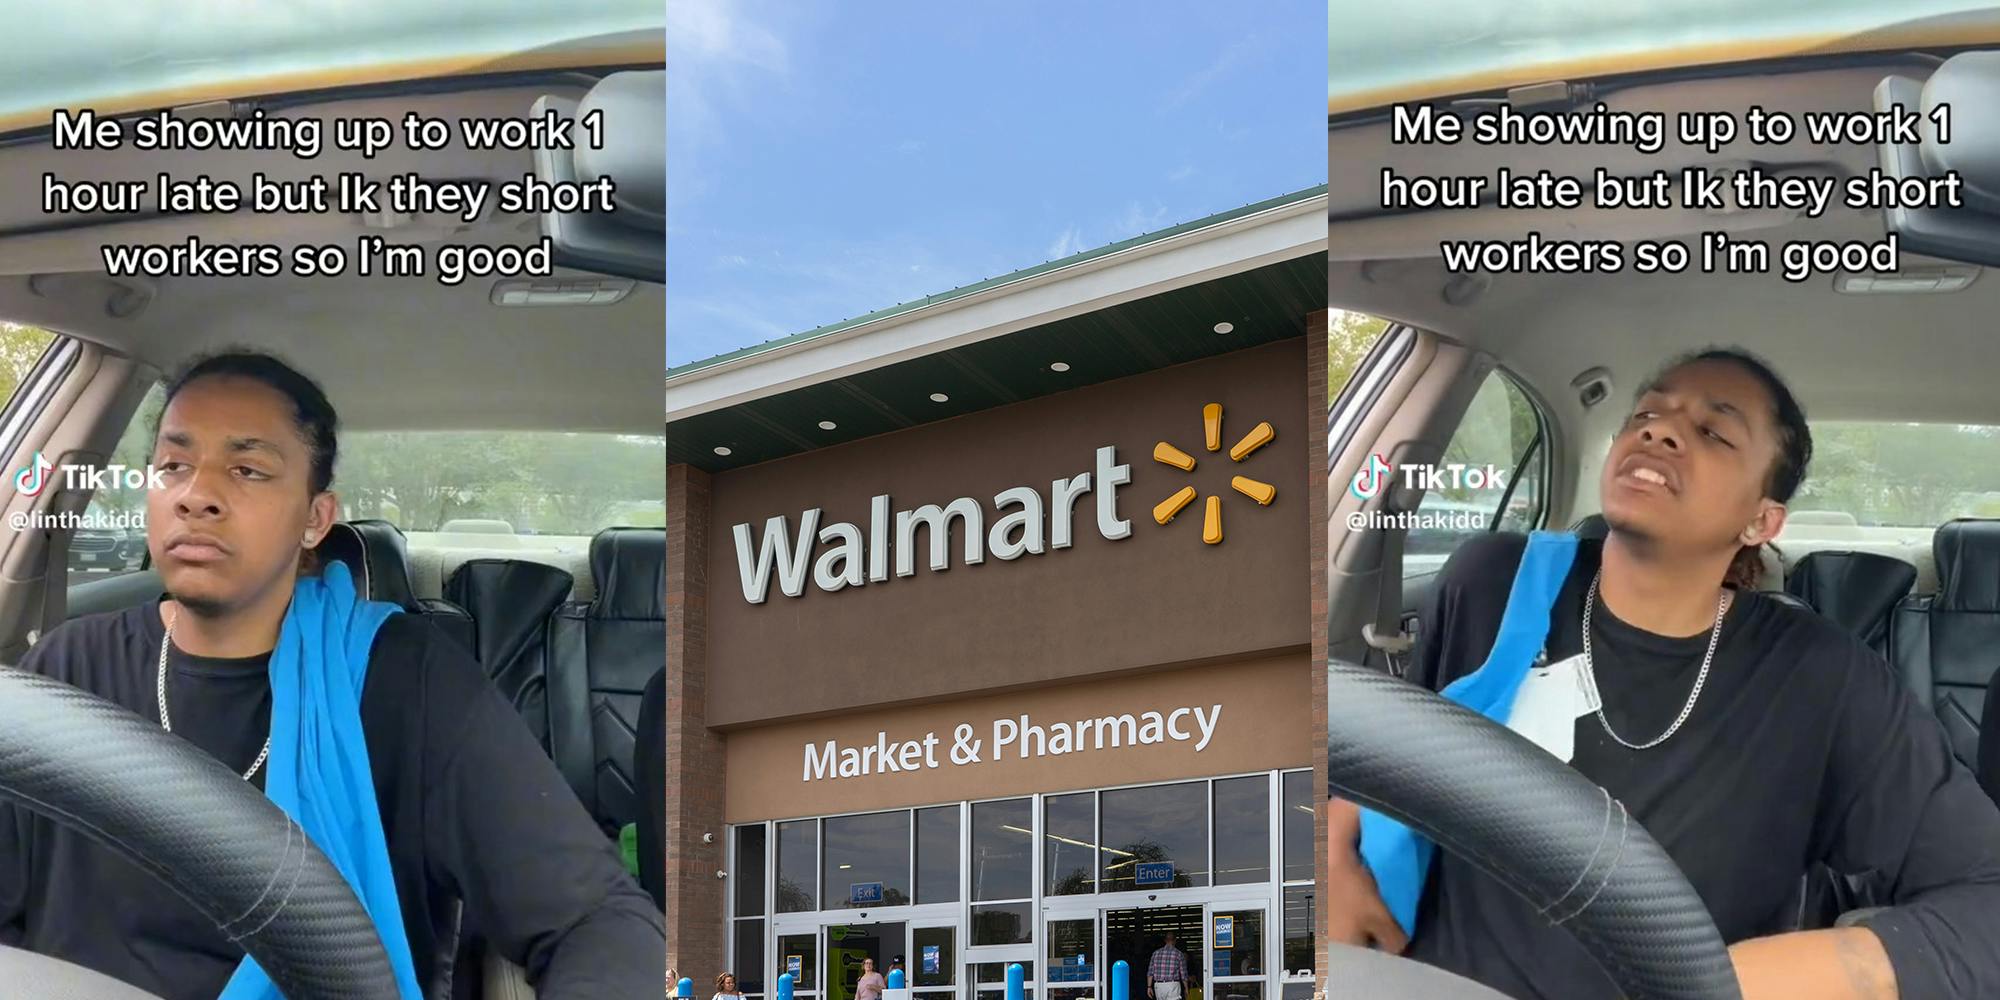 Walmart worker jokes about showing up 1 hour late when store is understaffed